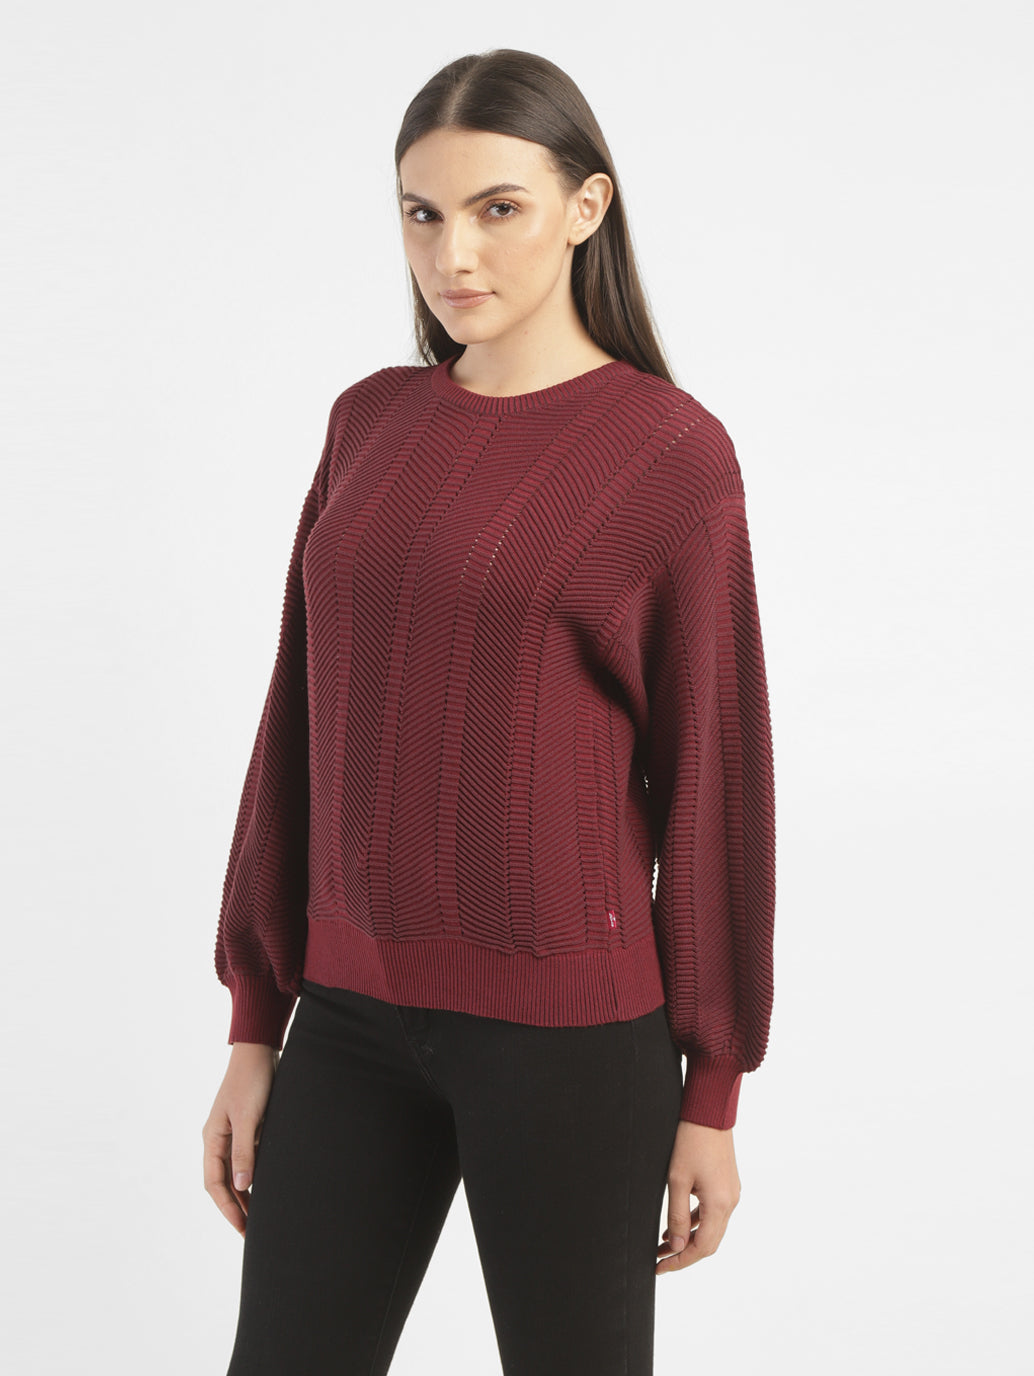 Women's Textured Red Crew Neck Sweater